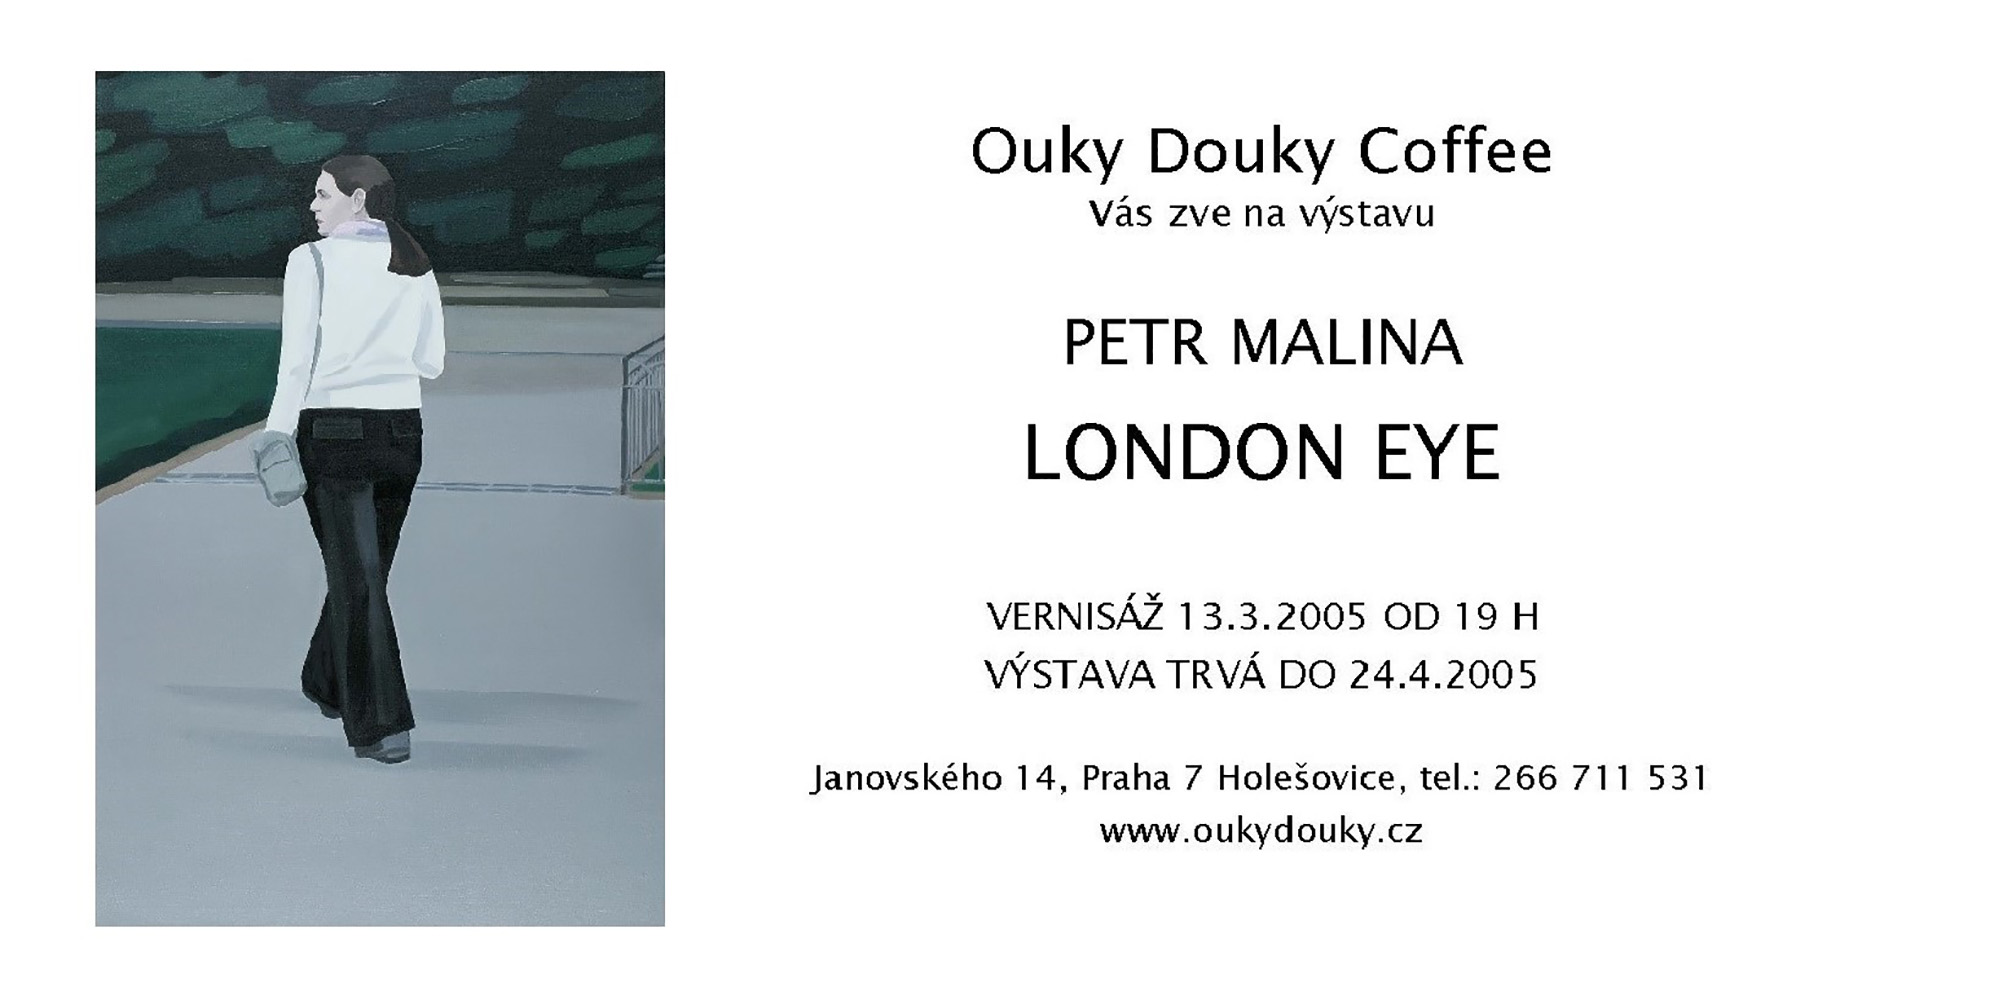 2005 London Eye, Ouky Douky Coffee, Praha